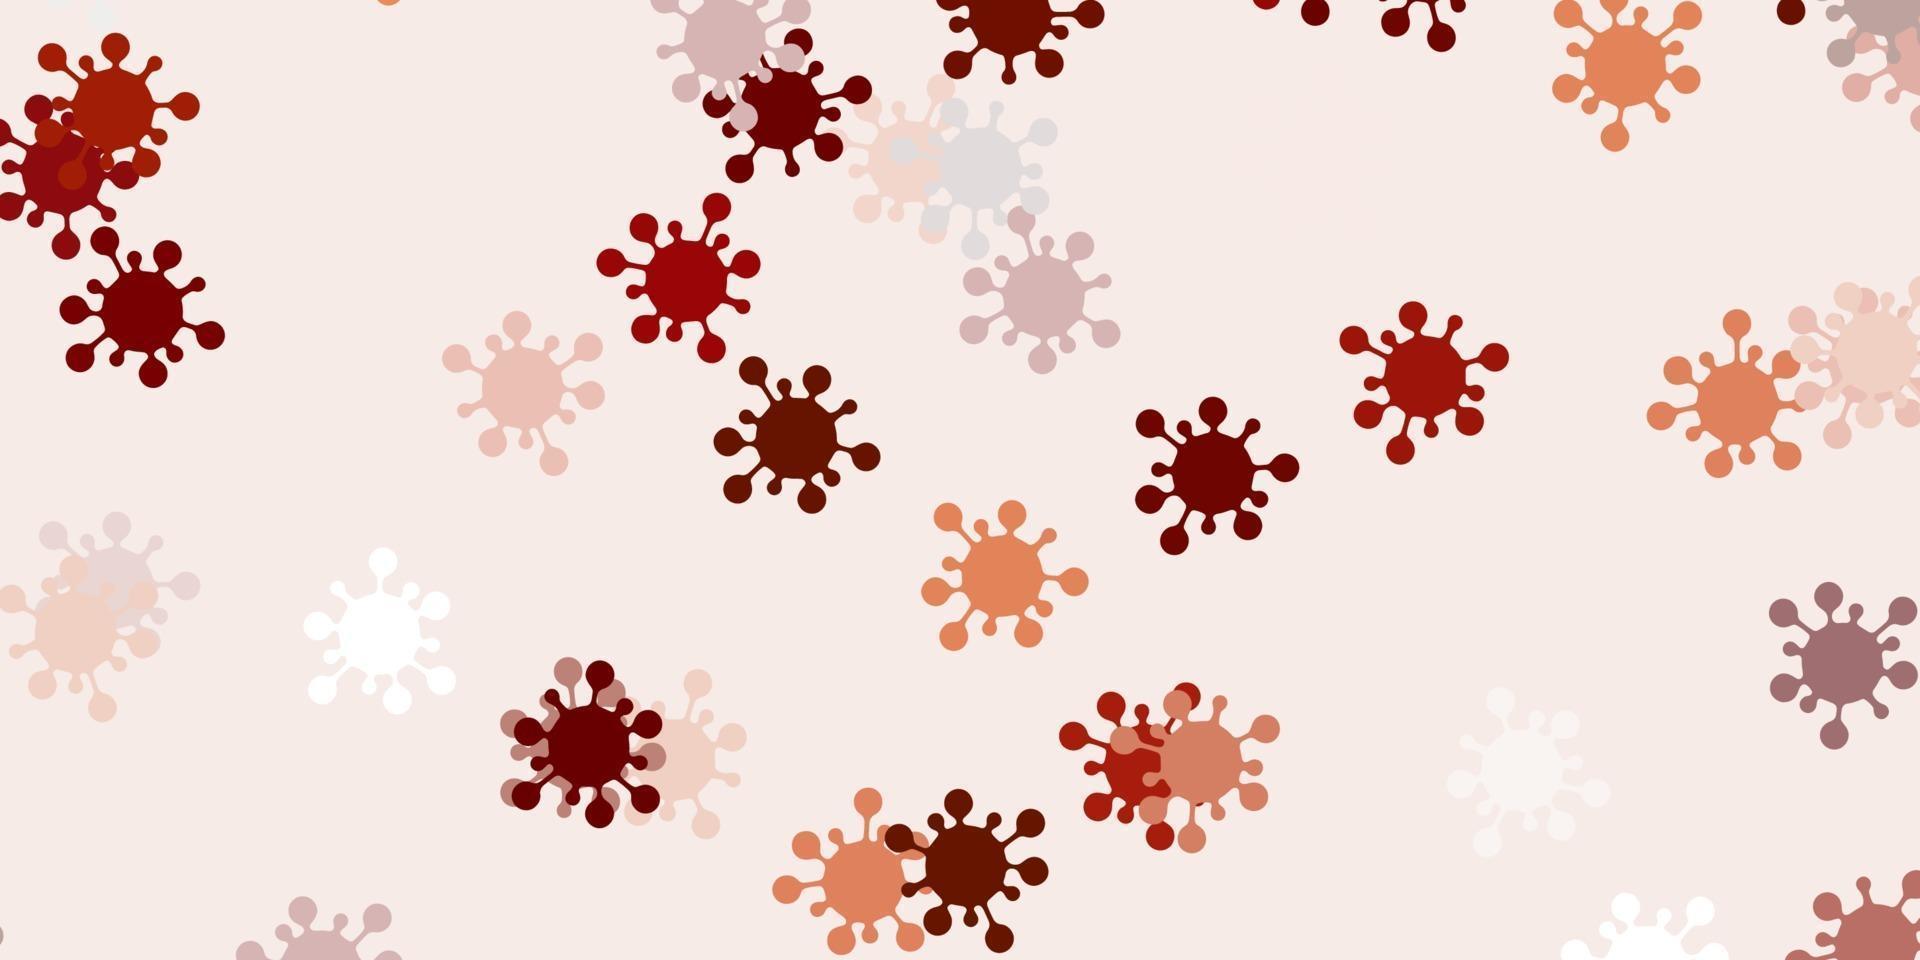 pano de fundo vector rosa claro com símbolos de vírus.